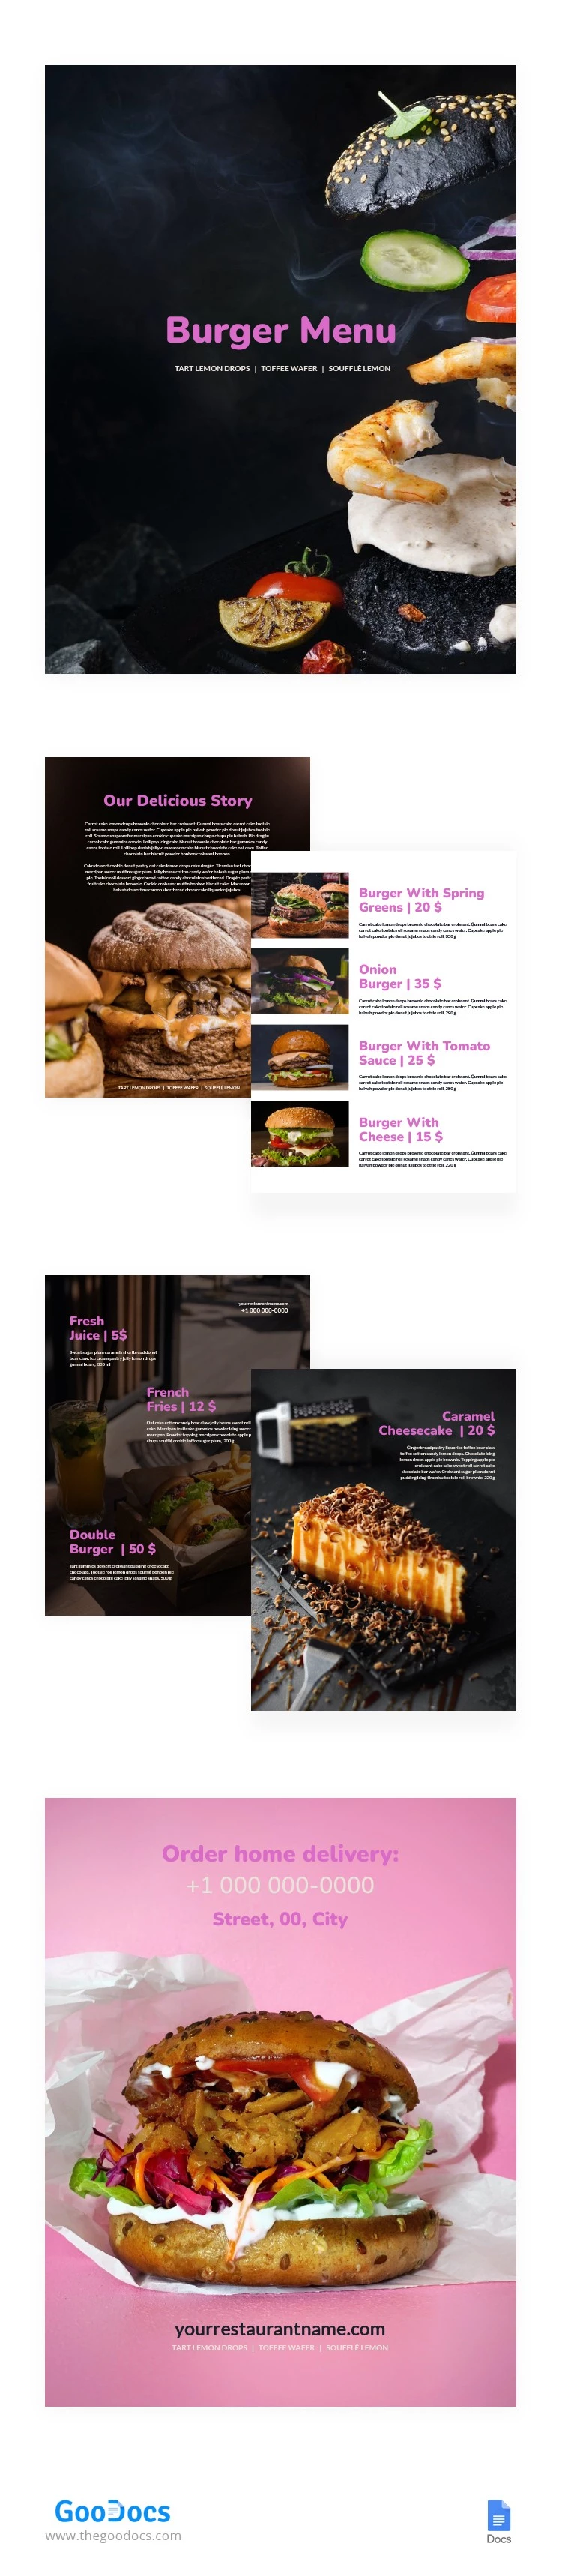 简易汉堡餐厅菜单 - free Google Docs Template - 10063786